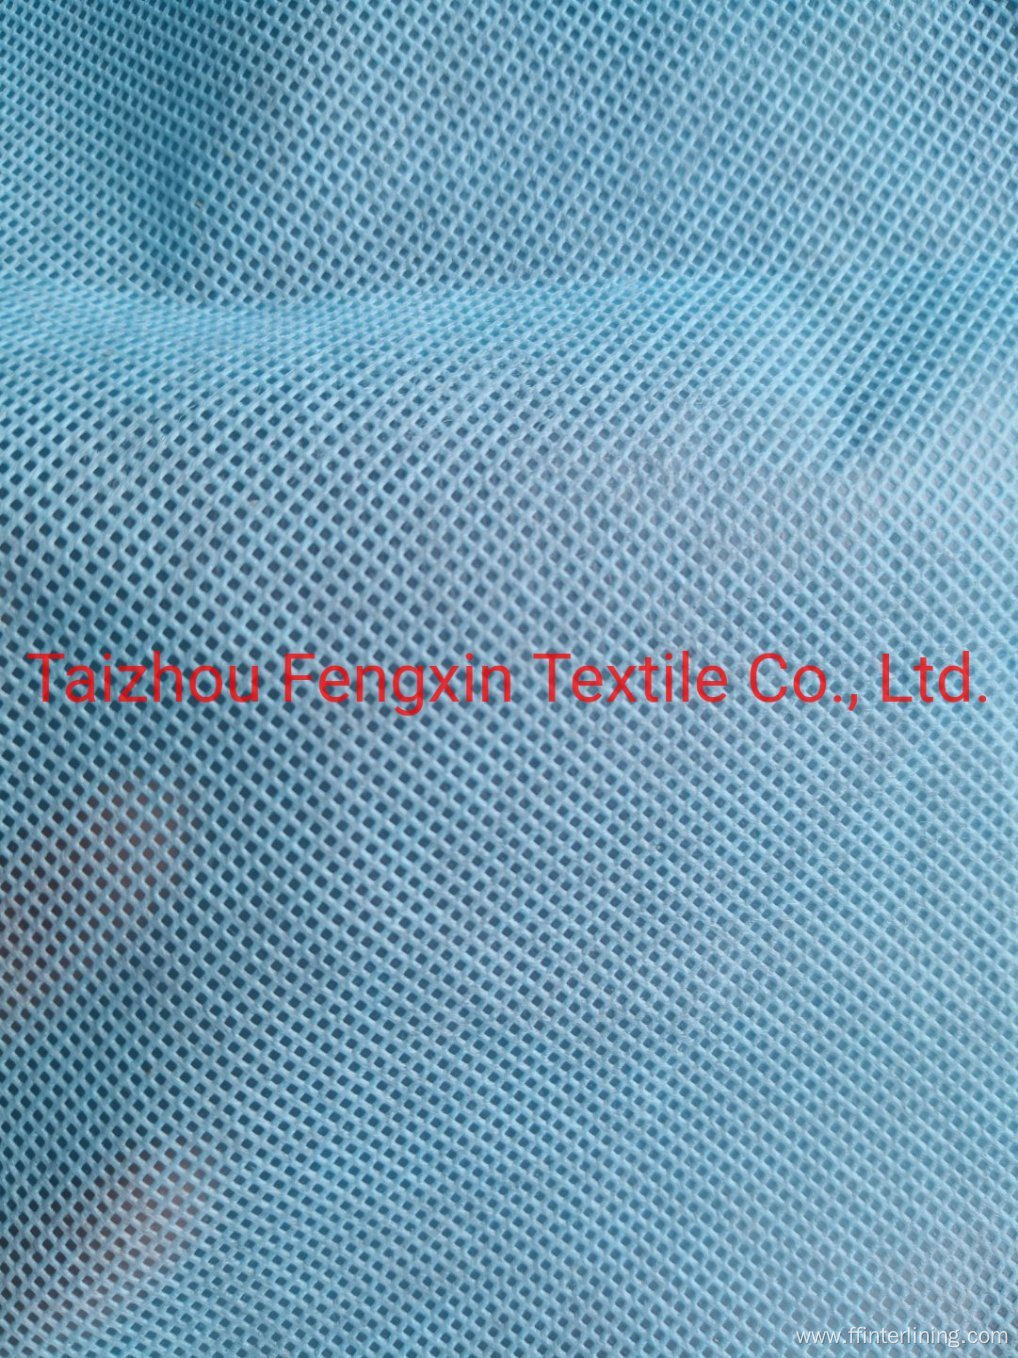 100% PP Granul Nonwoven UV Resistance Fabric